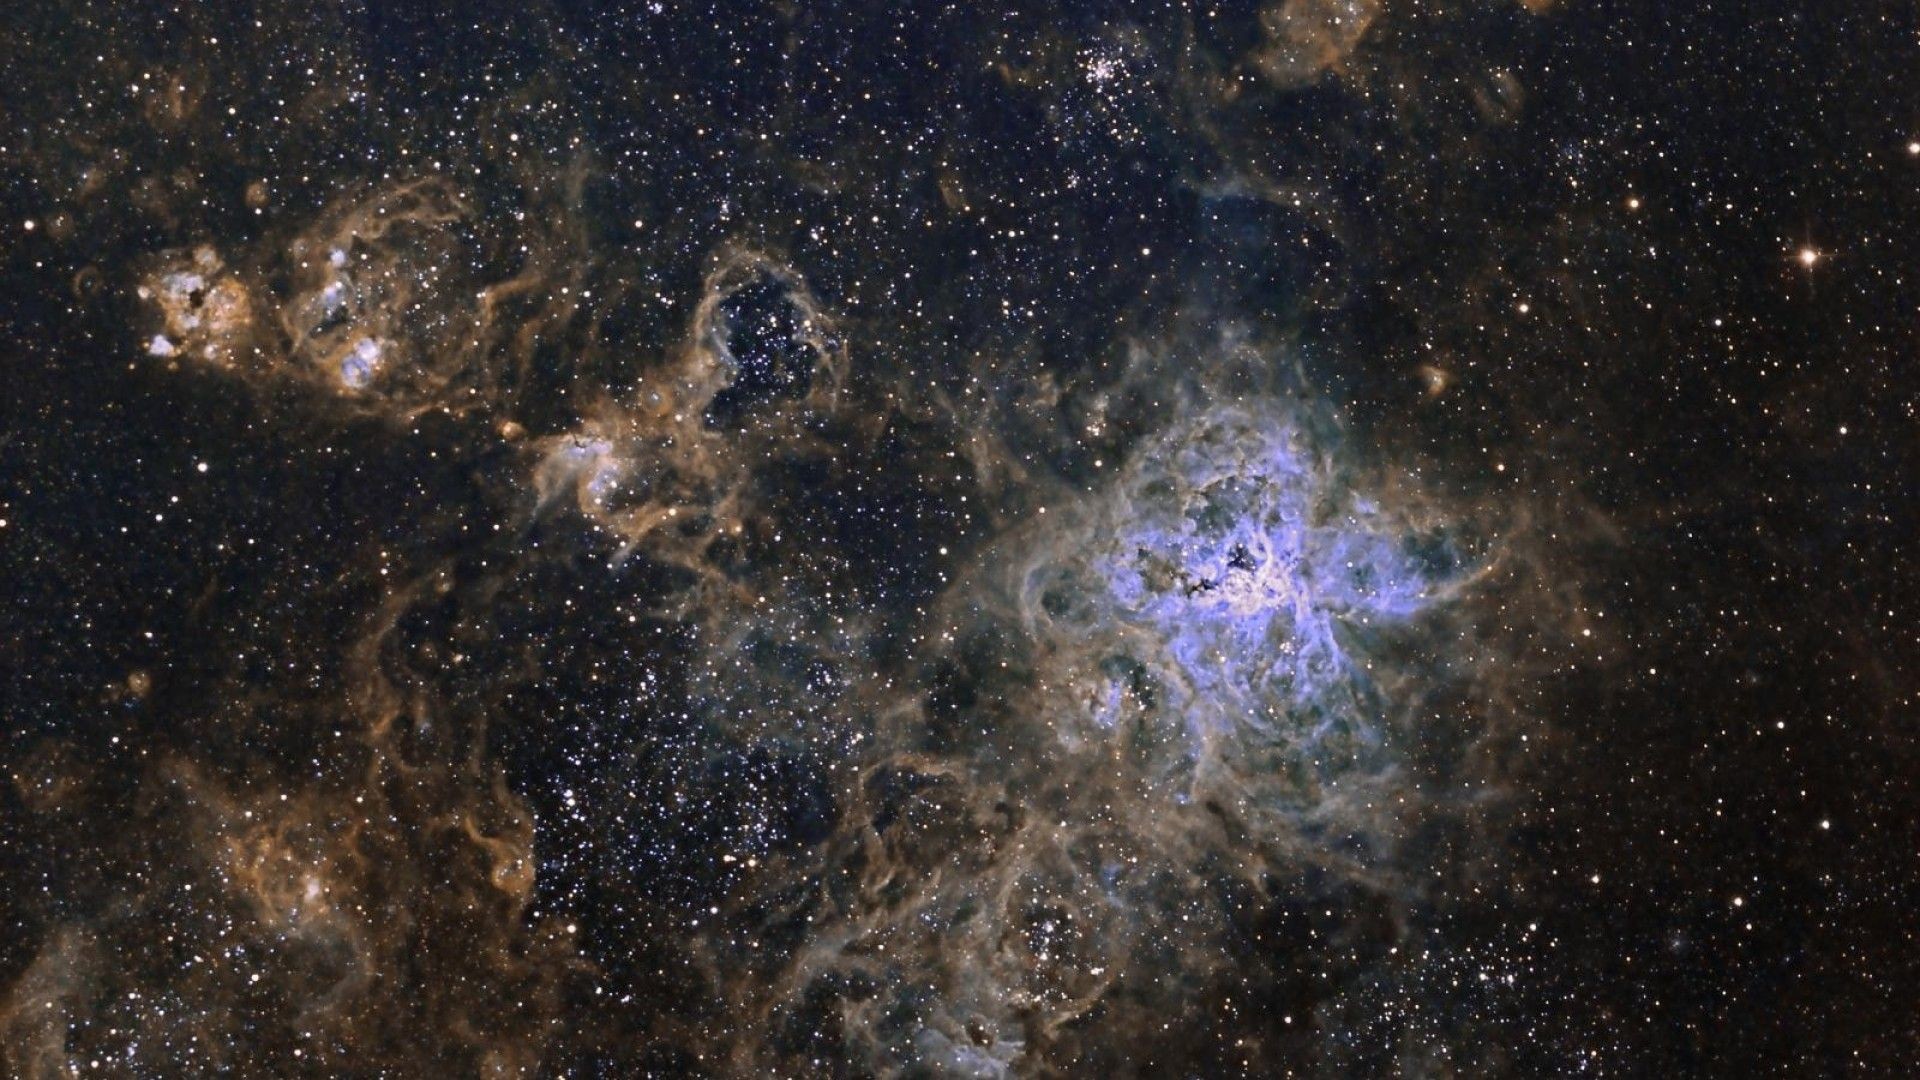 1920x1080, Nasa Space Pictures Hd Images 3 Hd Wallpapers - Tarantula Nebula  - 1920x1080 Wallpaper 